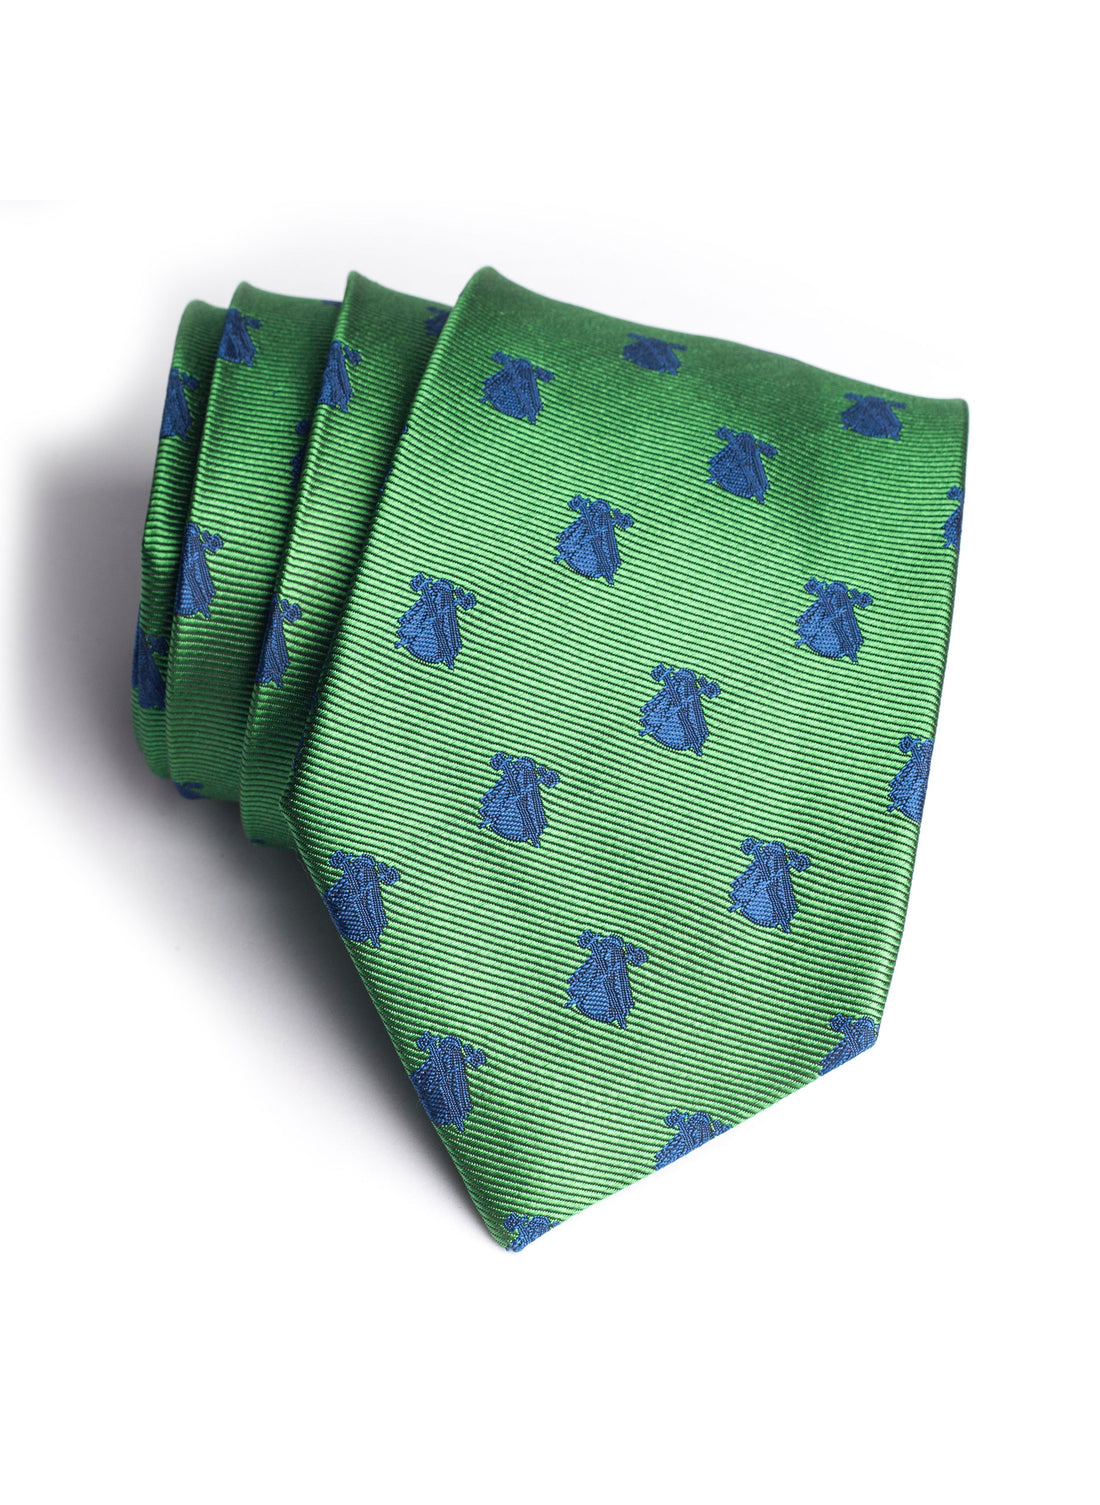 Marineblauwe logo's groene stropdas